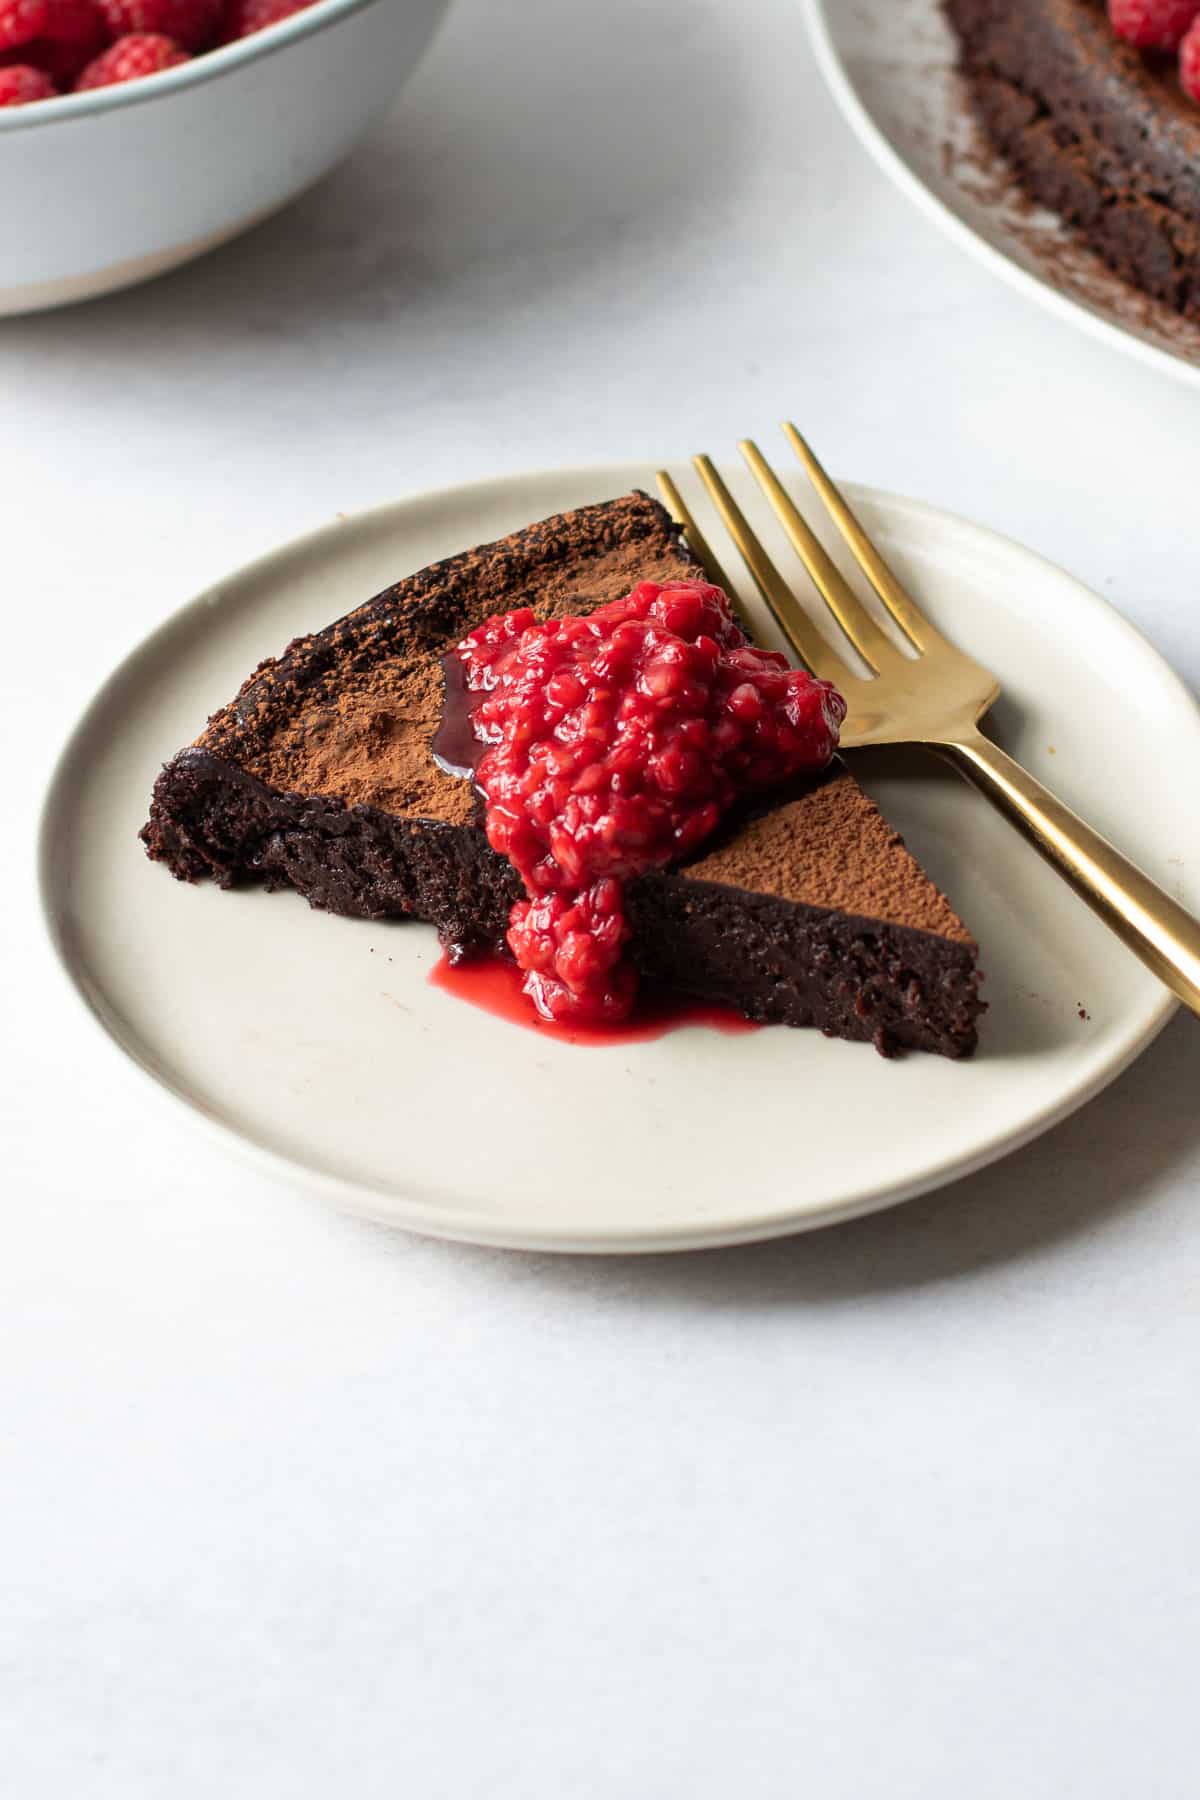 A slice of Paleo Flourless Chocolate cake with a quick raspberry sauce.